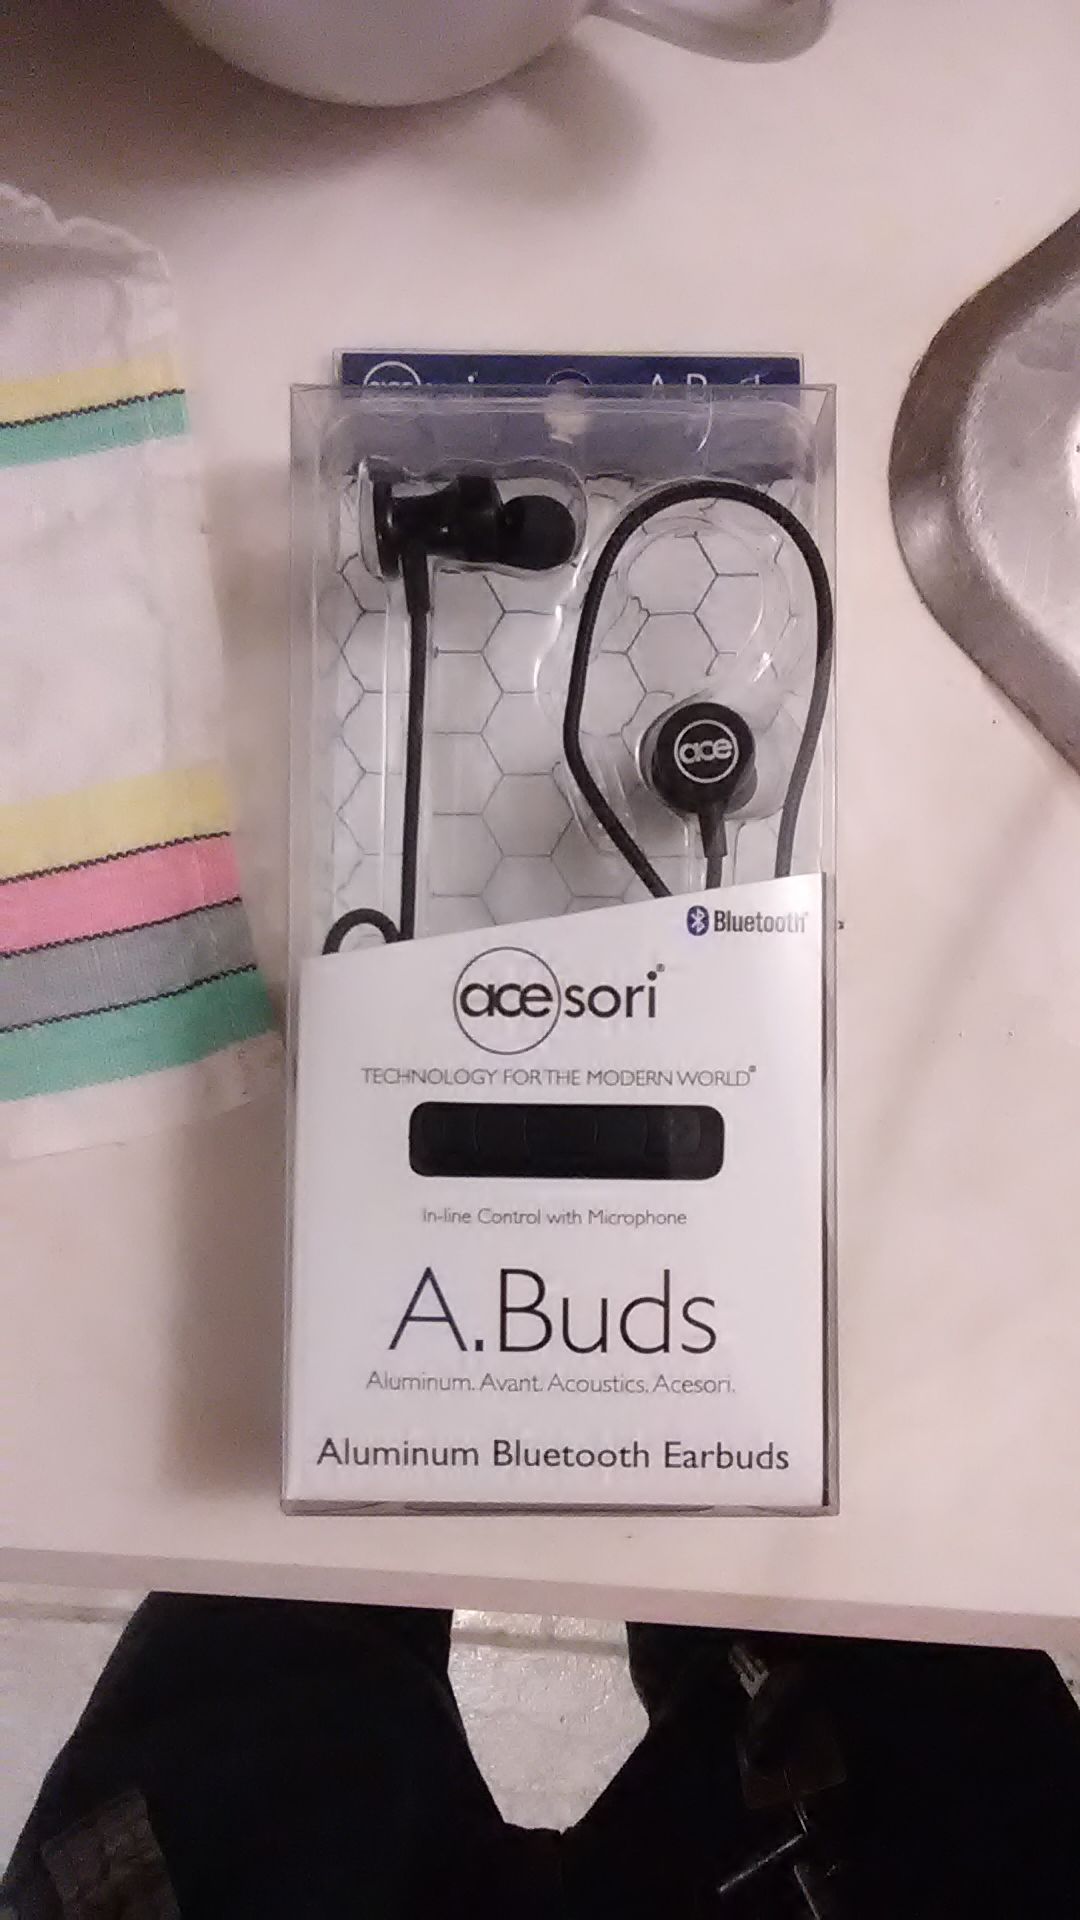 Acesori A.Buds Bluetooth Earbuds